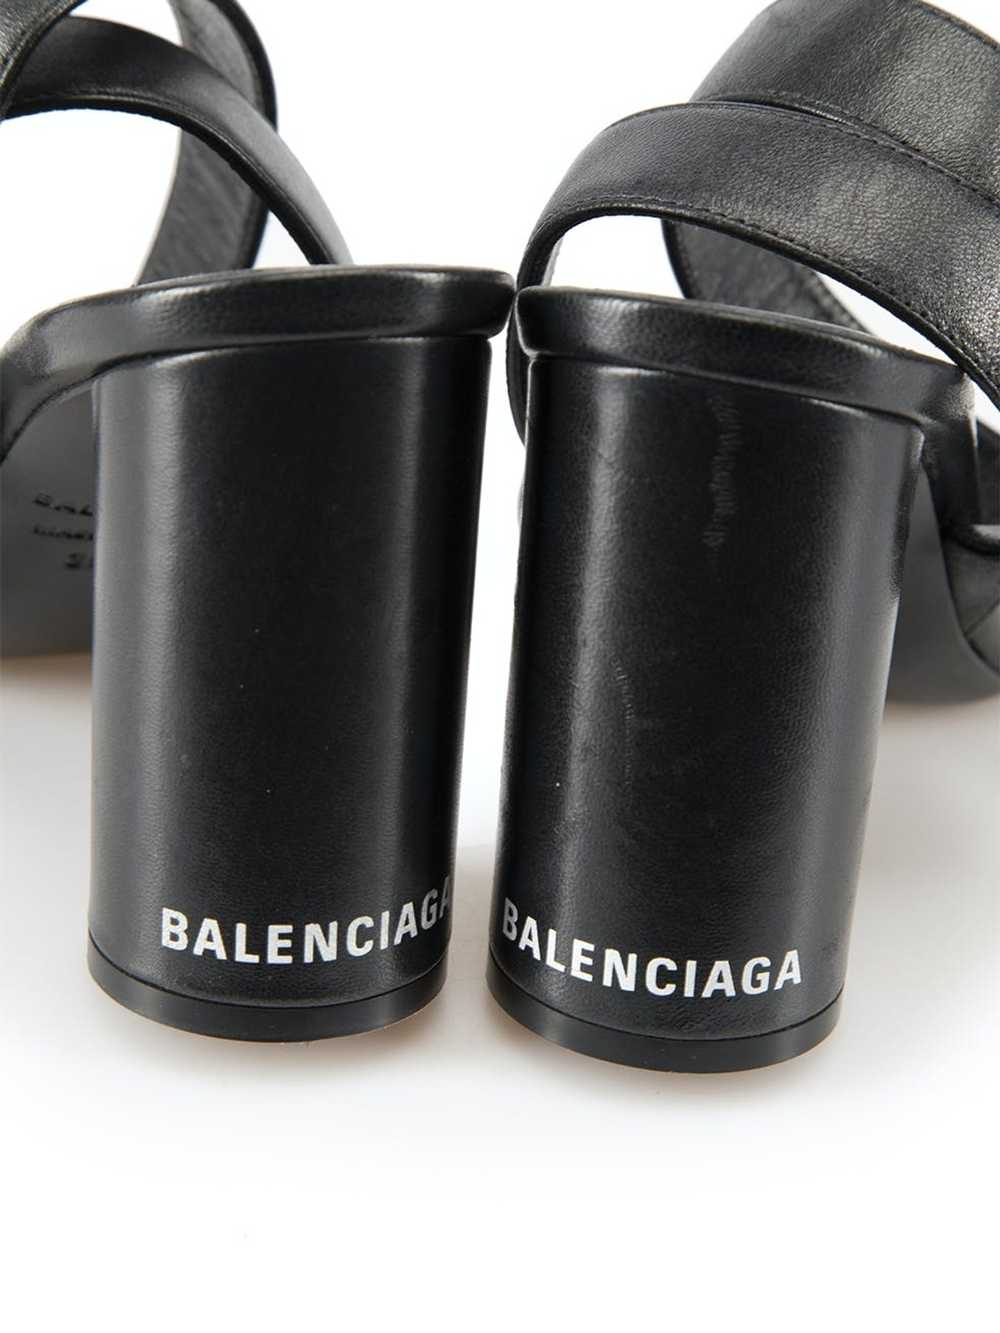 Balenciaga Black Leather Strappy Mid Heel Sandals - image 5